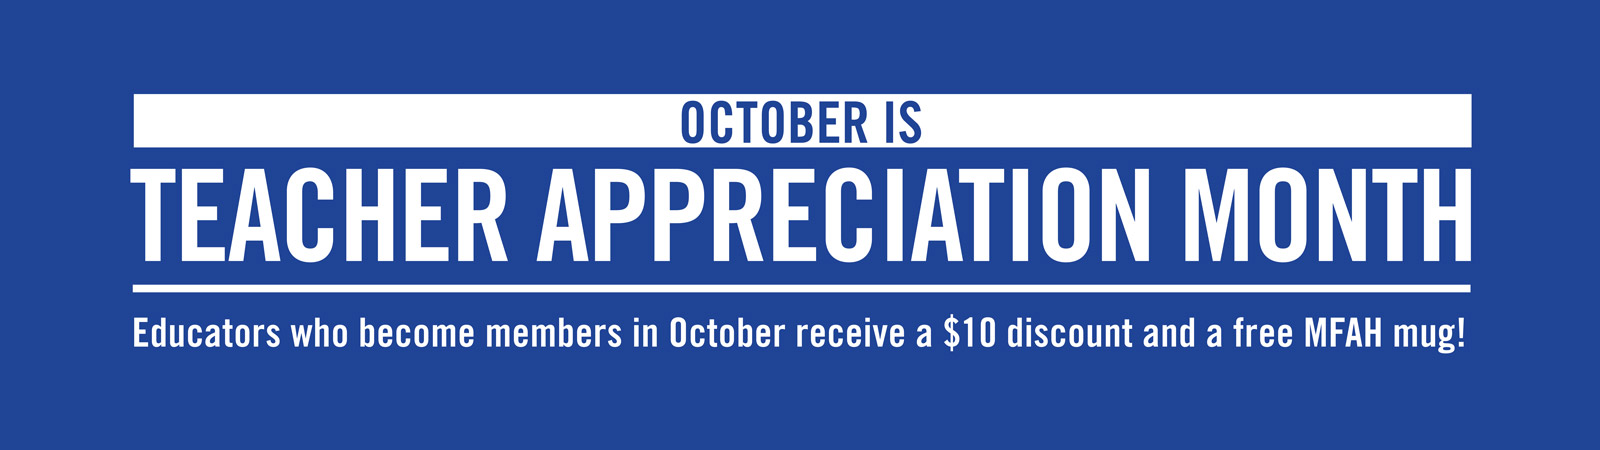 October is Teacher Appreciation Month!